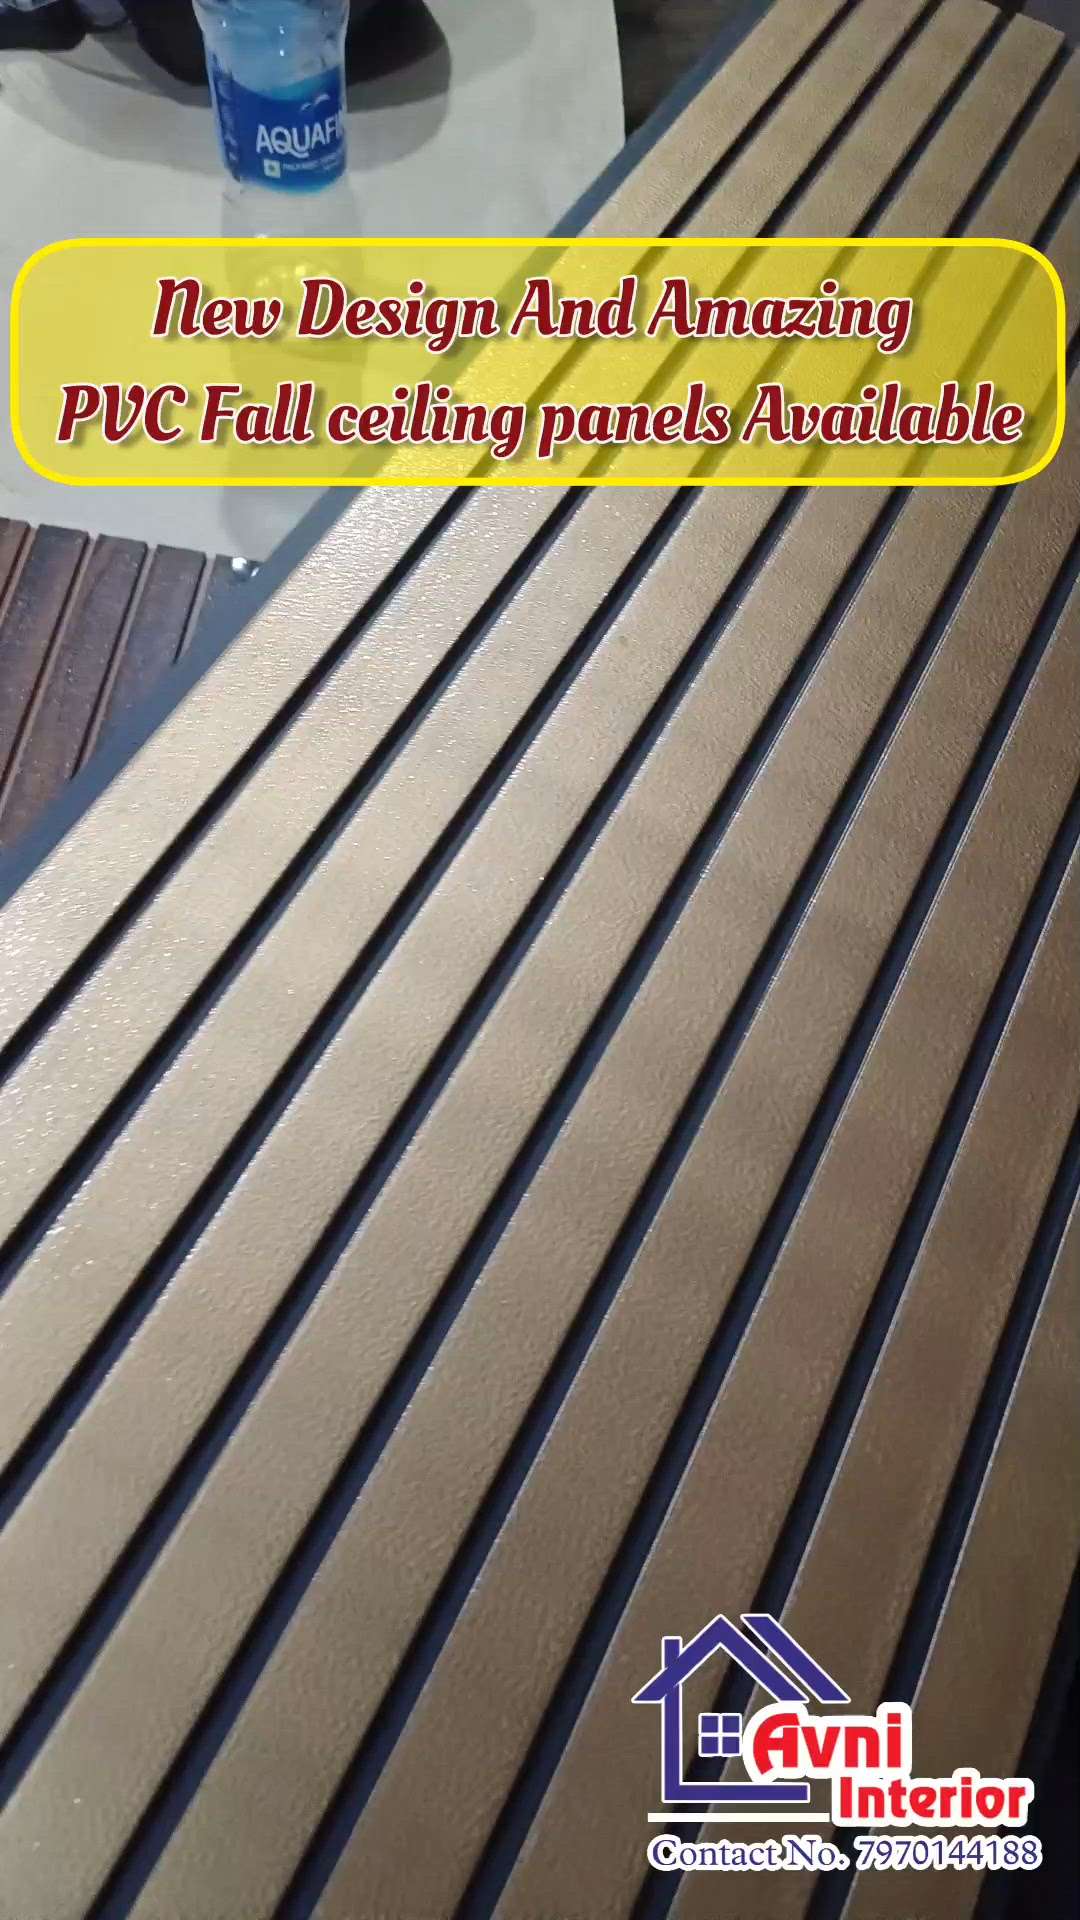 New Design And Amazing  #PVCFalseCeiling panels Available...7970144188 #FalseCeiling #Pvcpanel #GypsumCeiling #cieling #cielingdesign